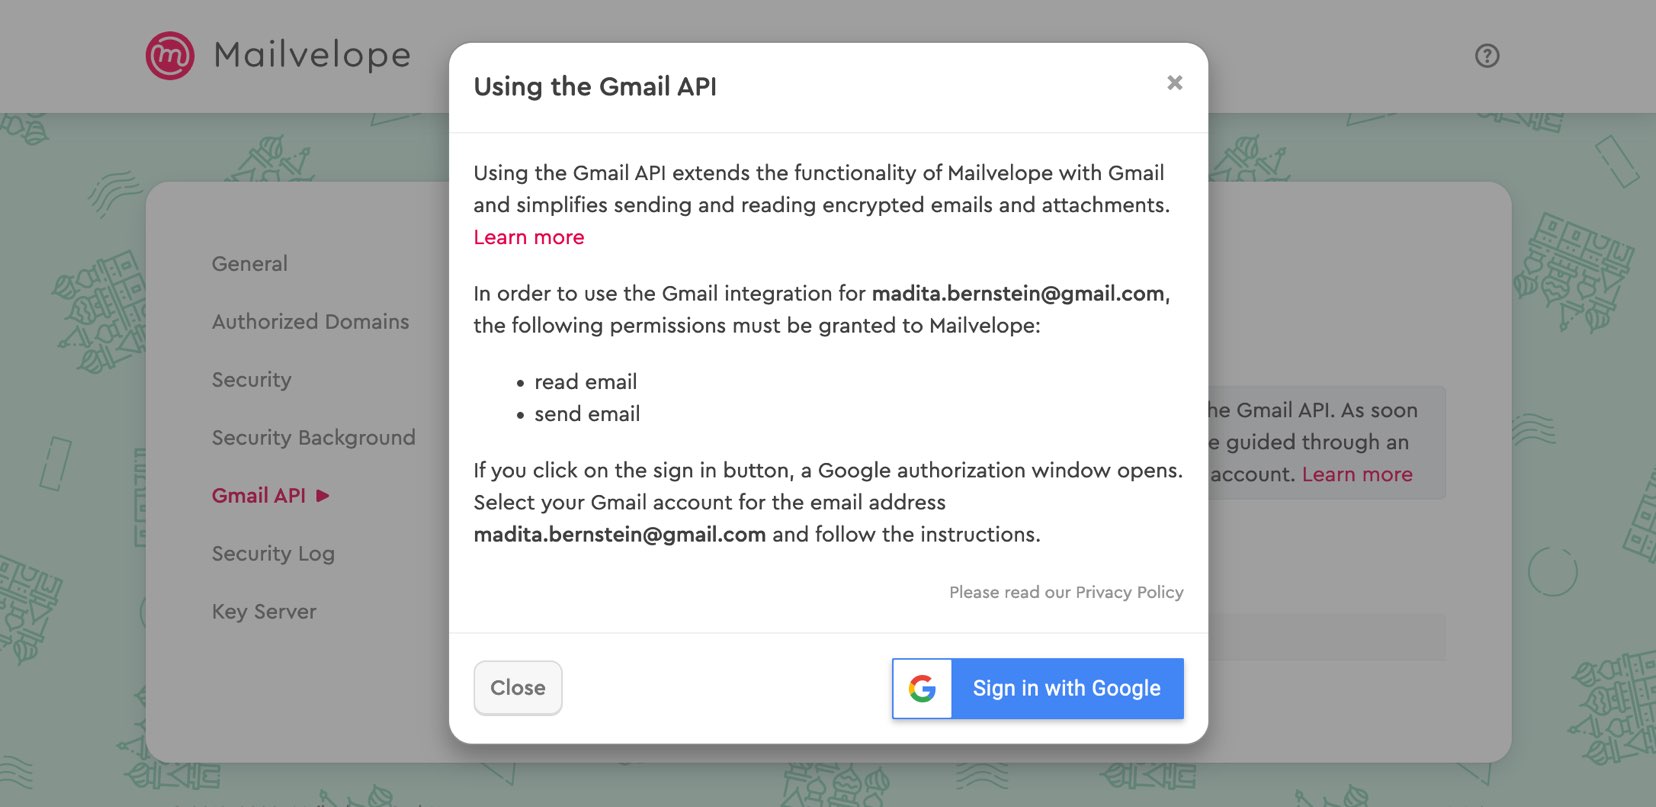 Gmail API Notification Prompt